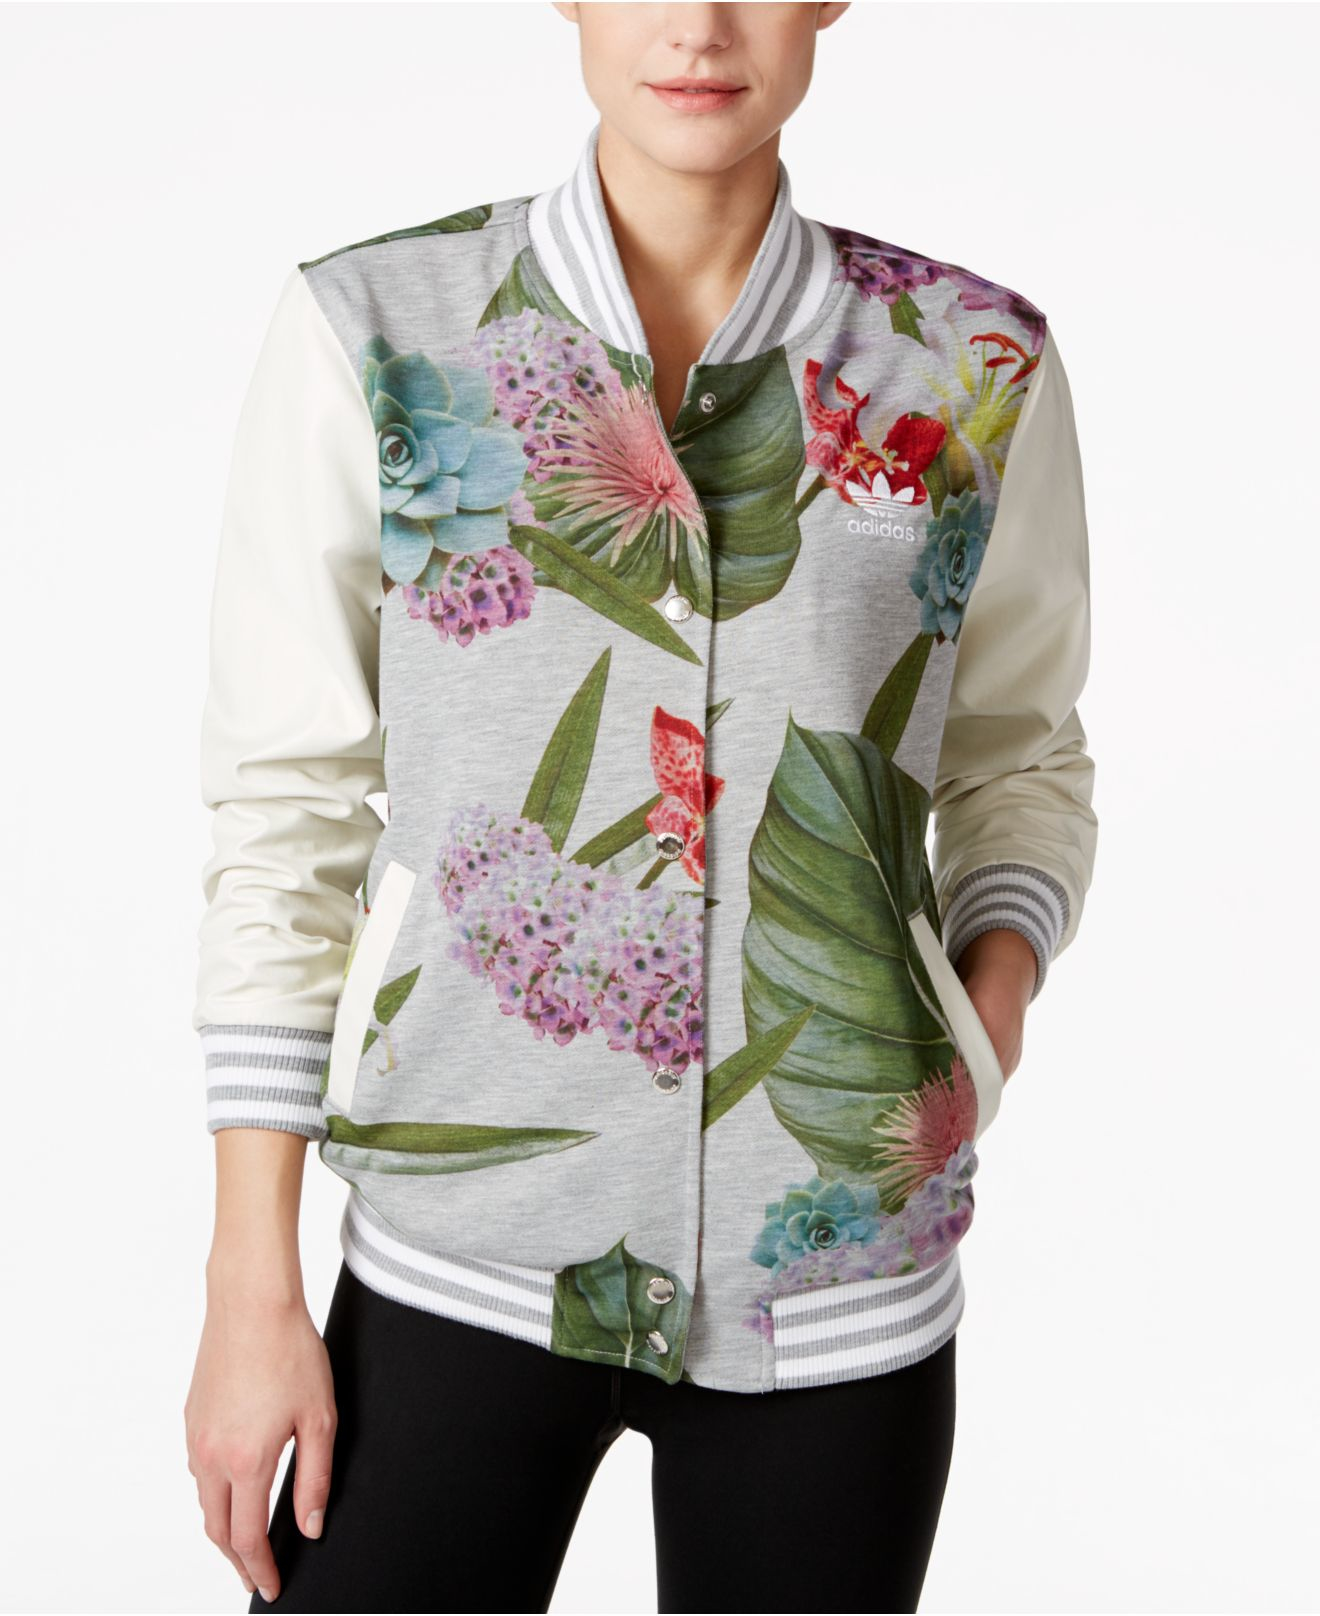 adidas floral print jacket